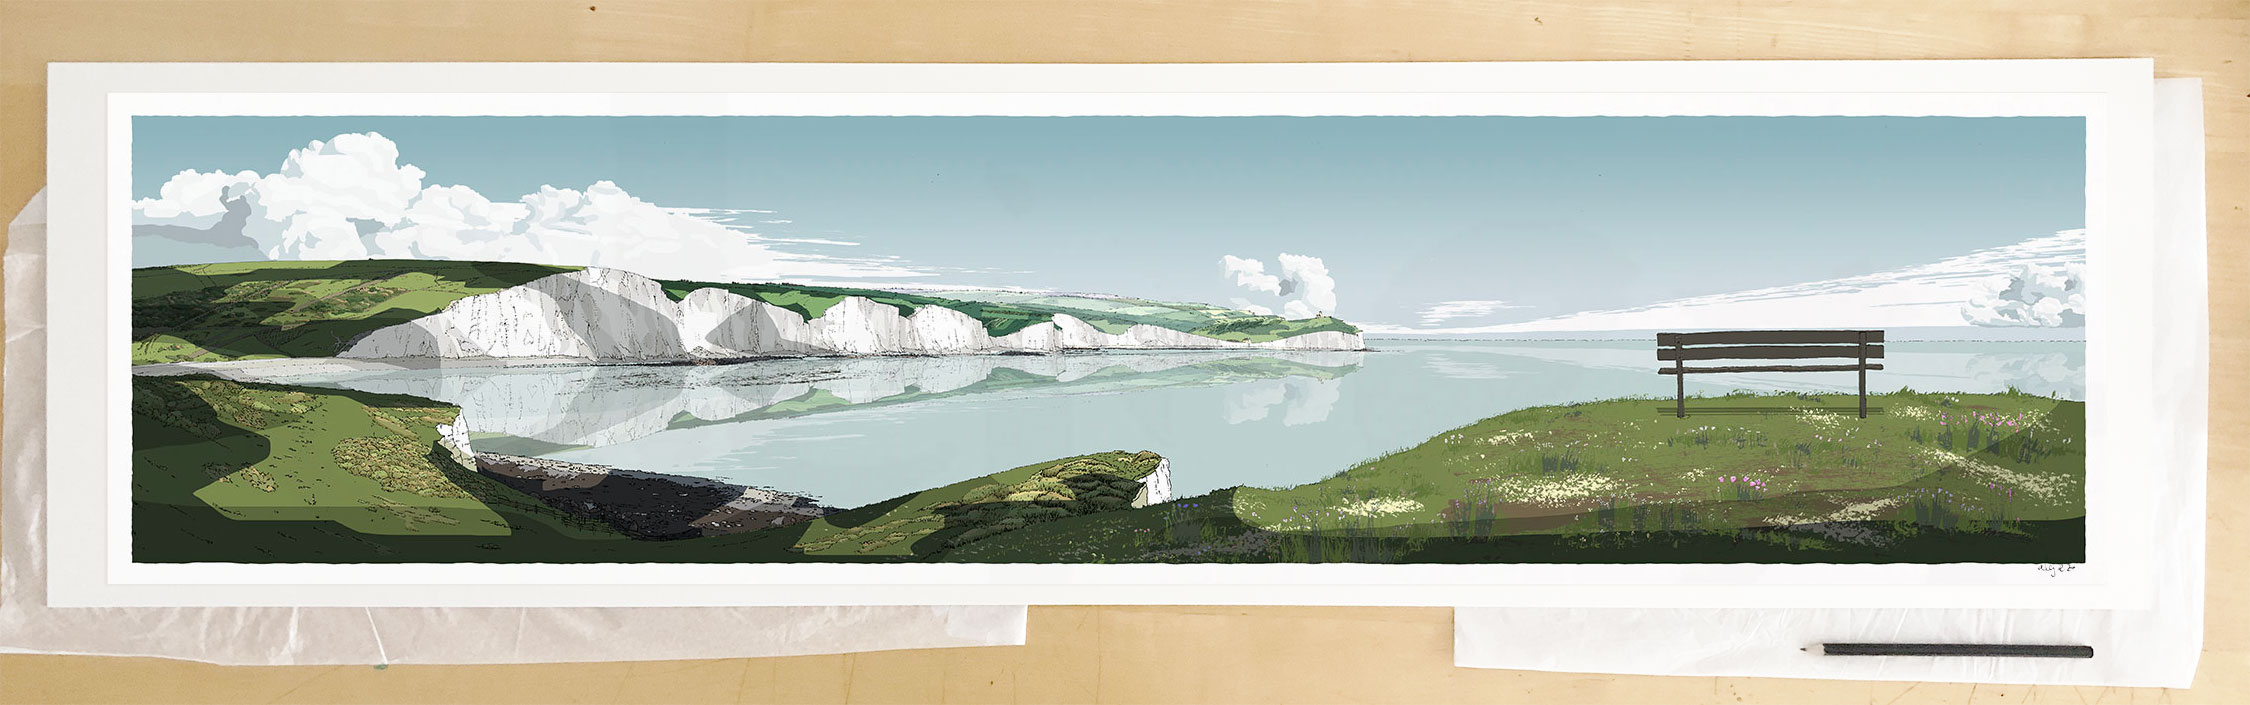 Fine art print by UK artist alej ez titled Seven Sisters Cliffs Seven Sisters Cliffs